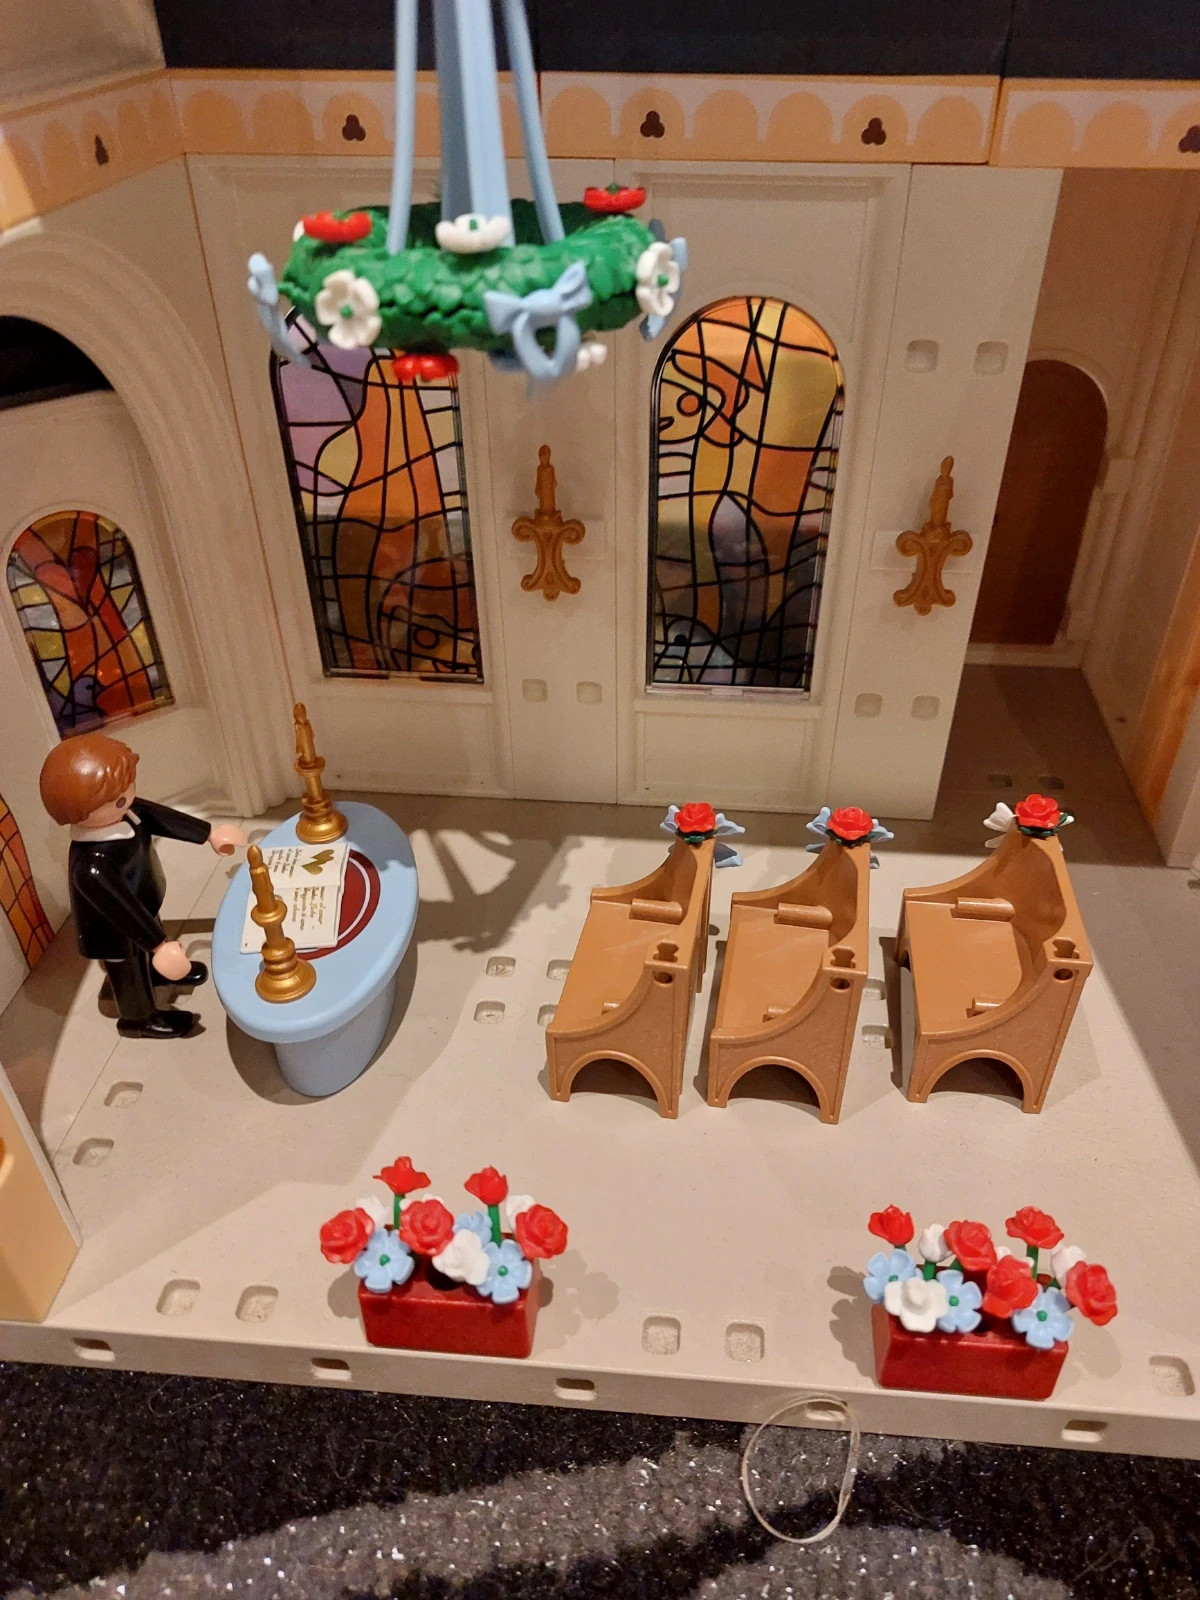 Cadre de mariage Playmobil, caseau de mariage original – Luckyfind